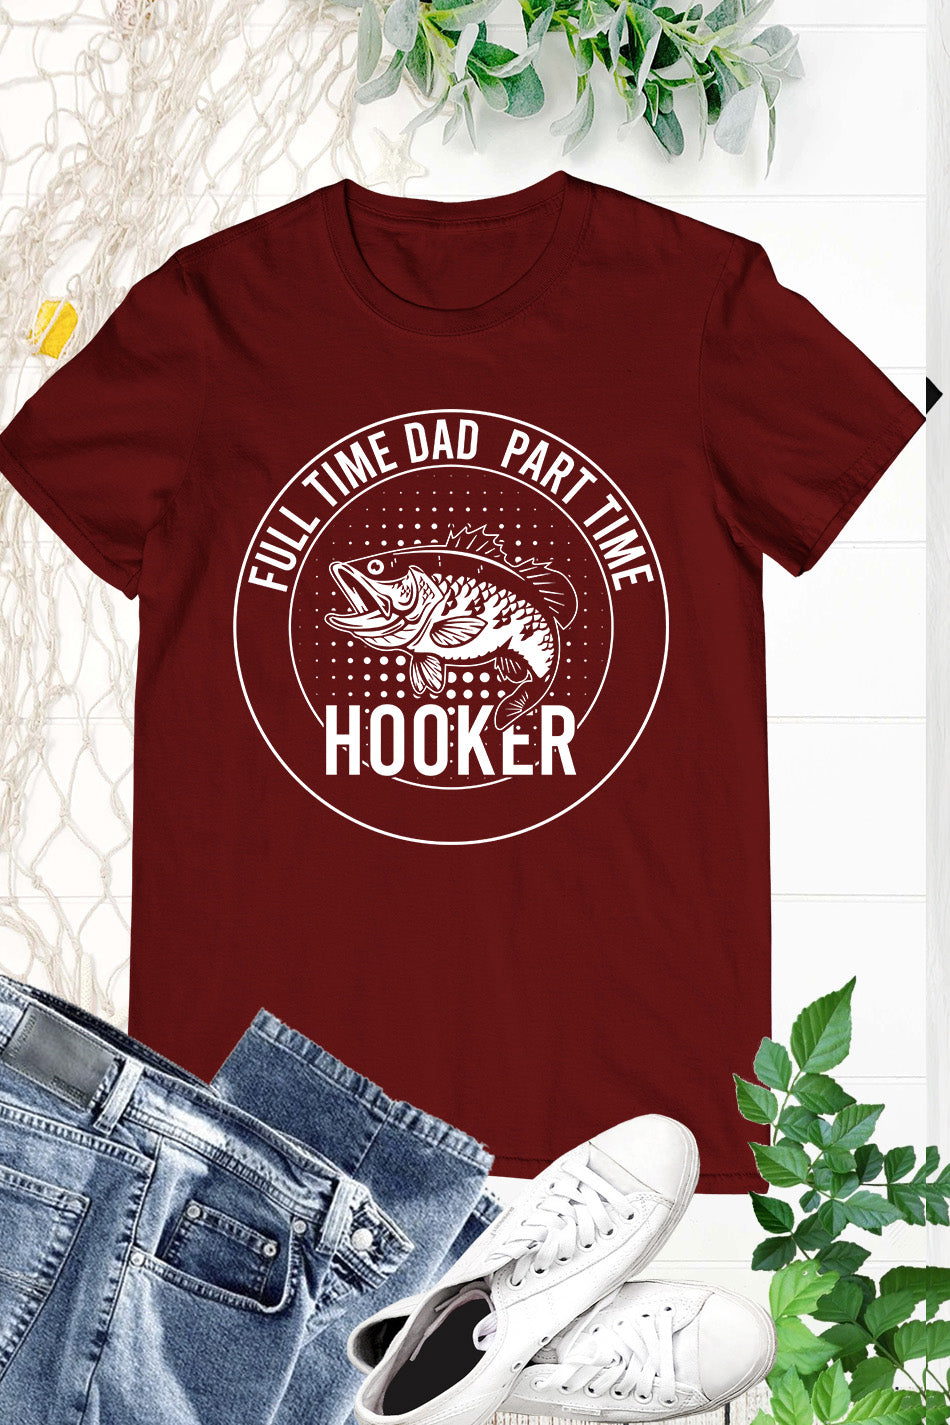 Full time Dad Part Time Hooker Shirt